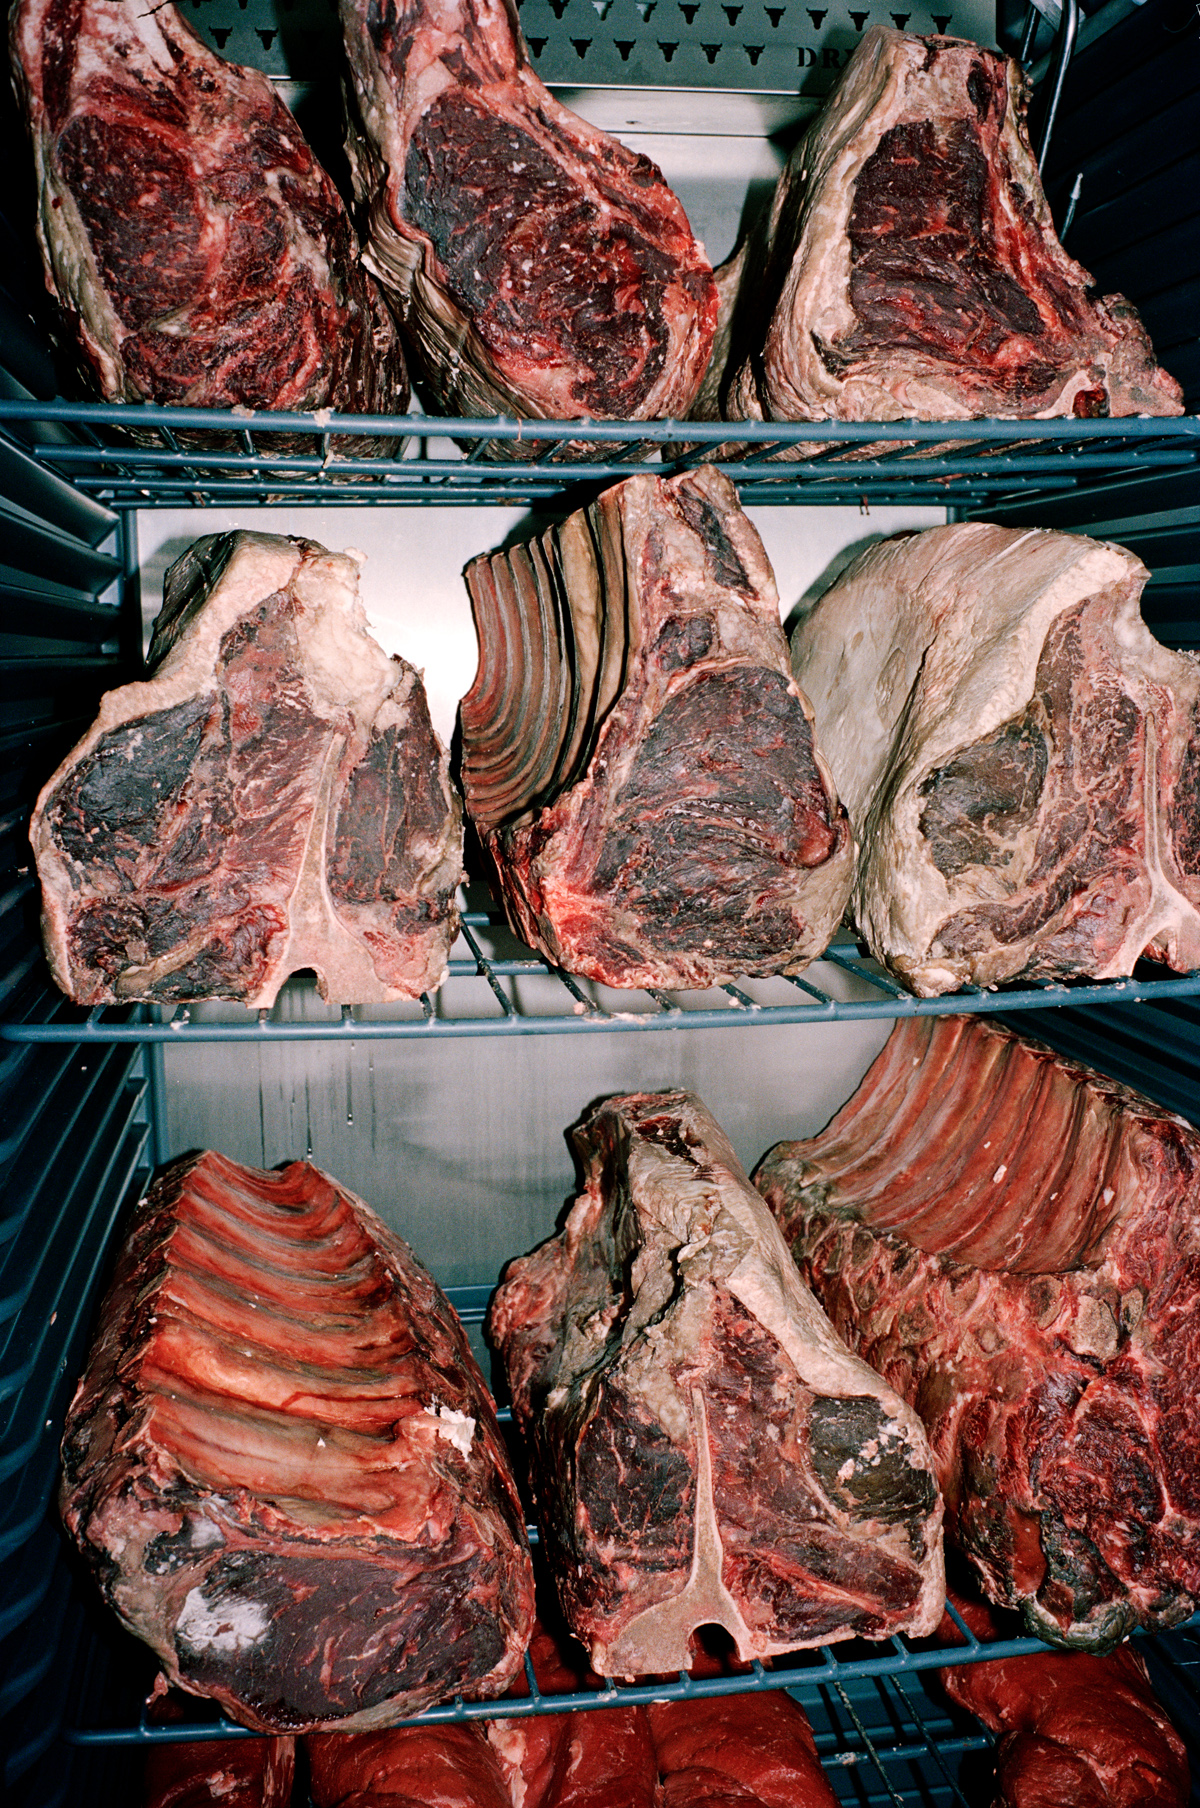 Simon Habegger Simons' Steakhouse Zürich dry aged beef Fleisch Reifung
Schrank